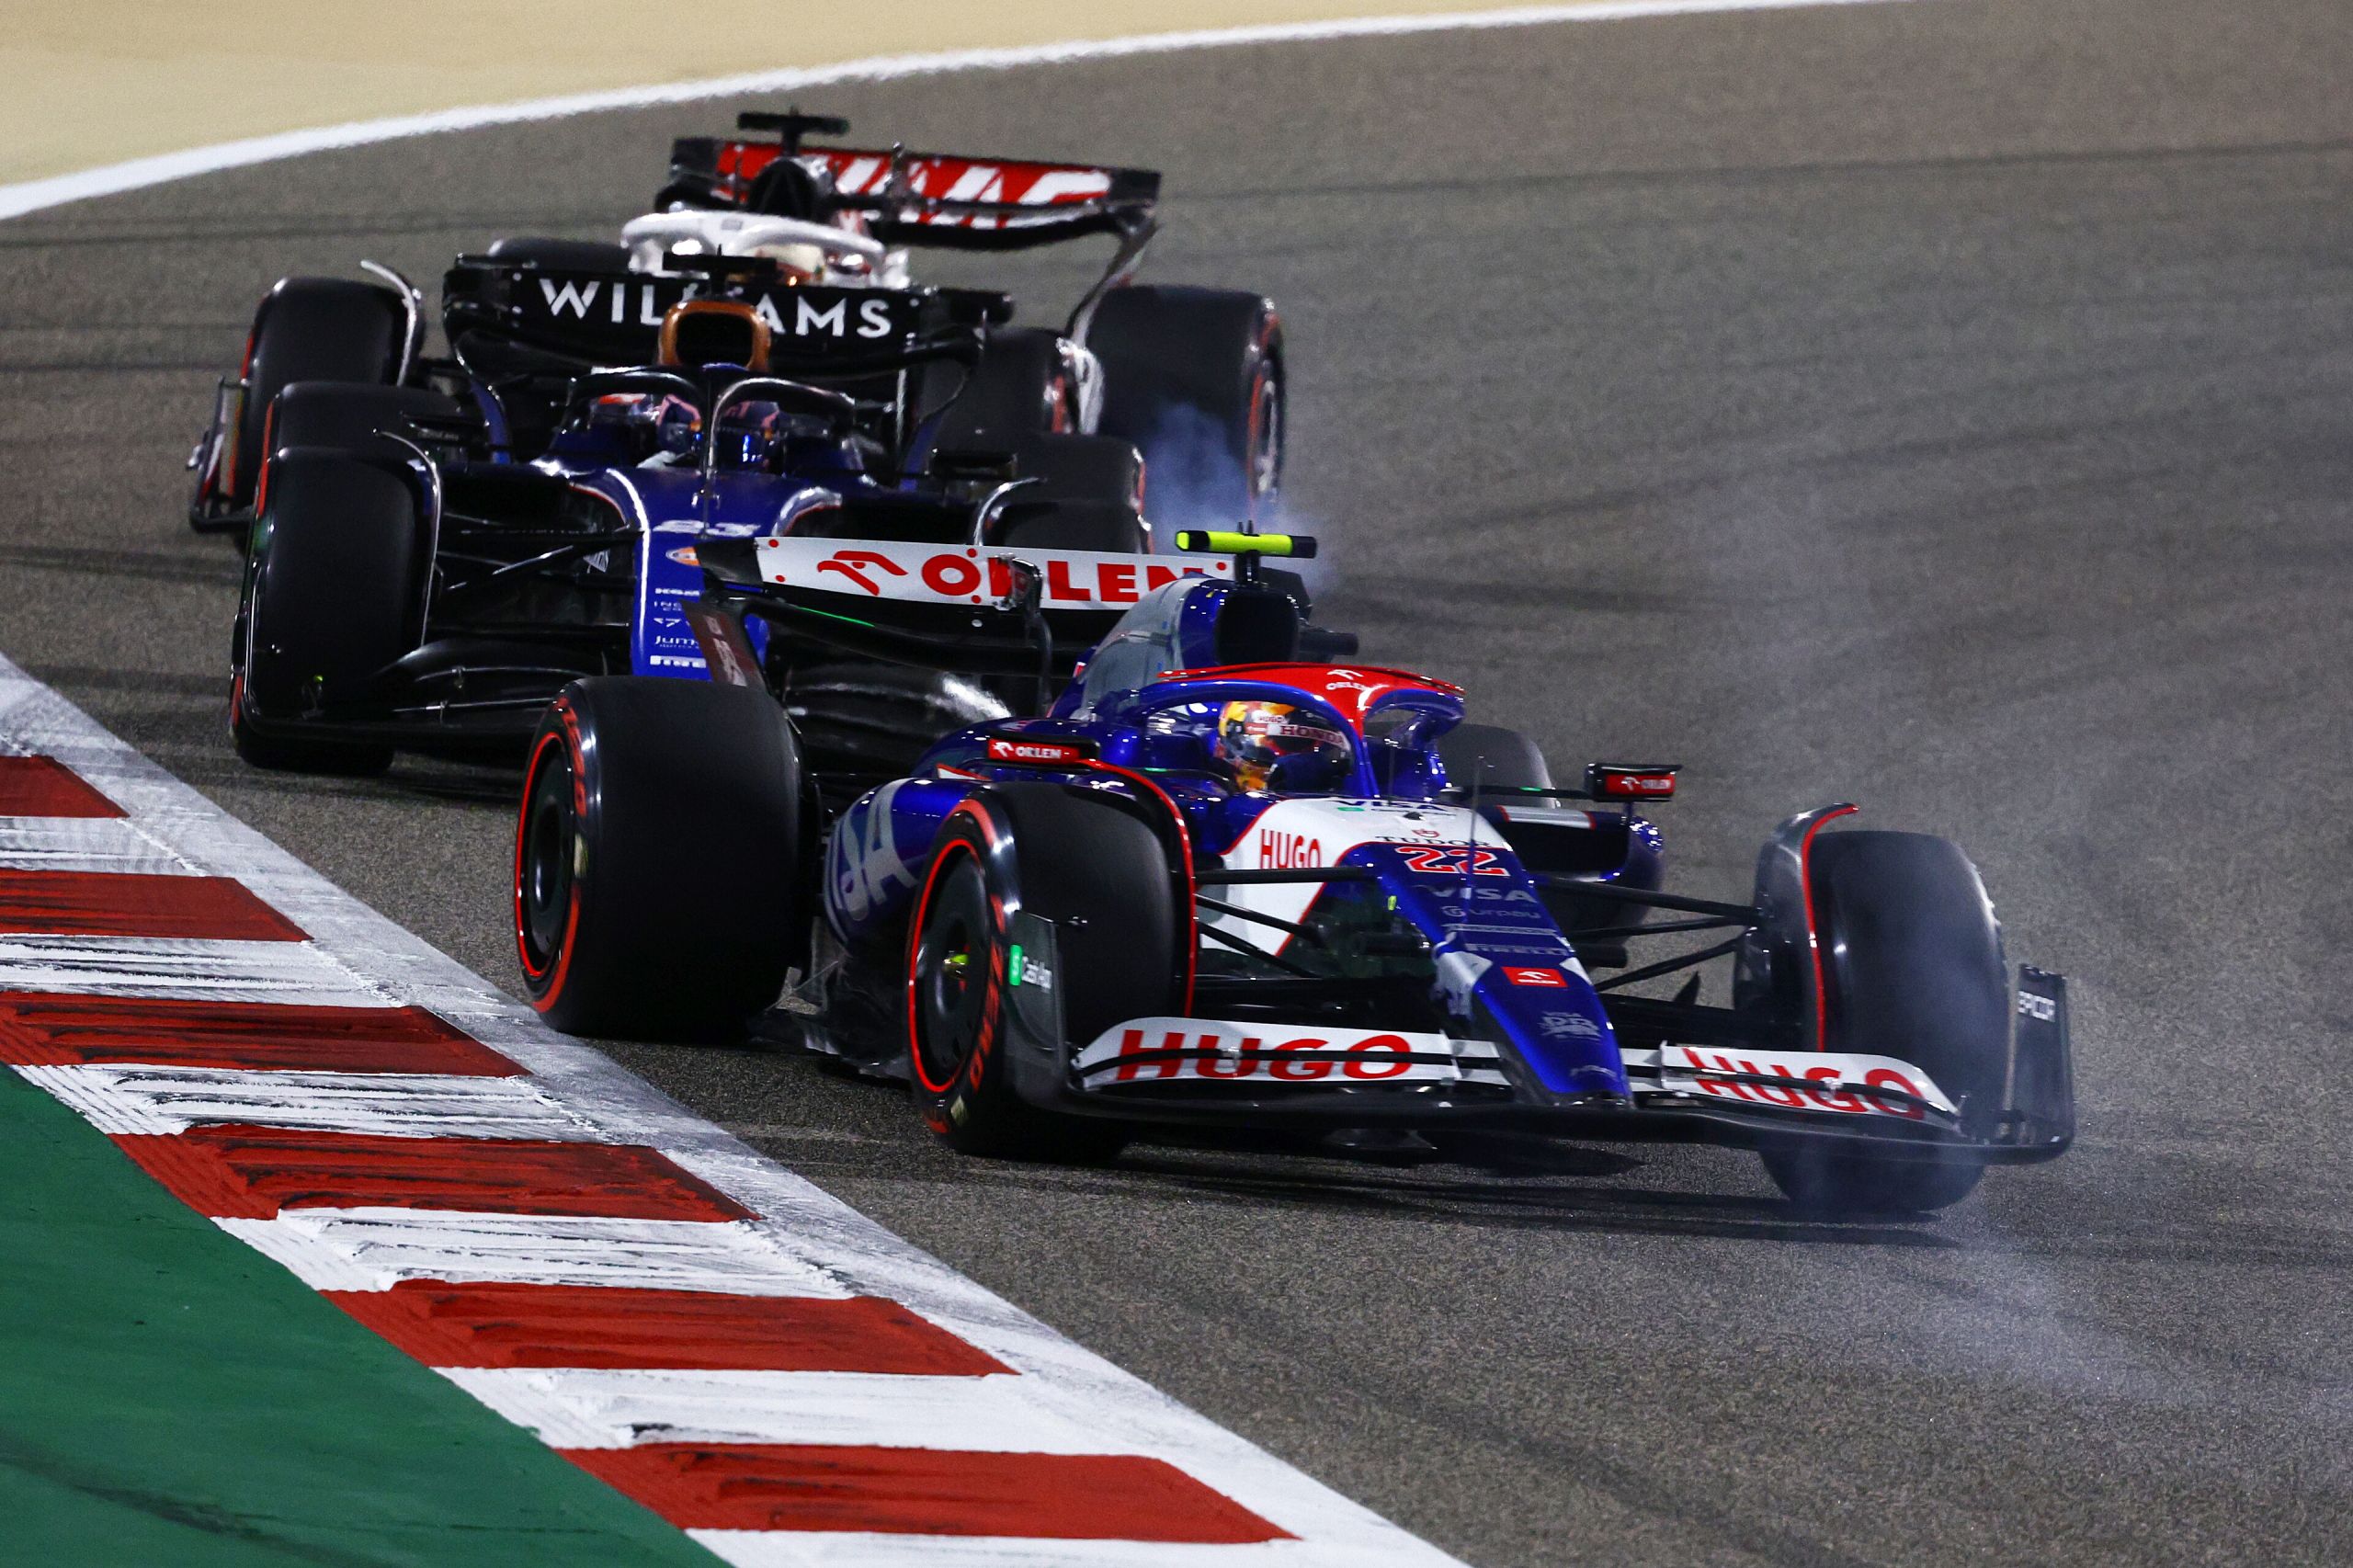 F1 Grand Prix Of Bahrain